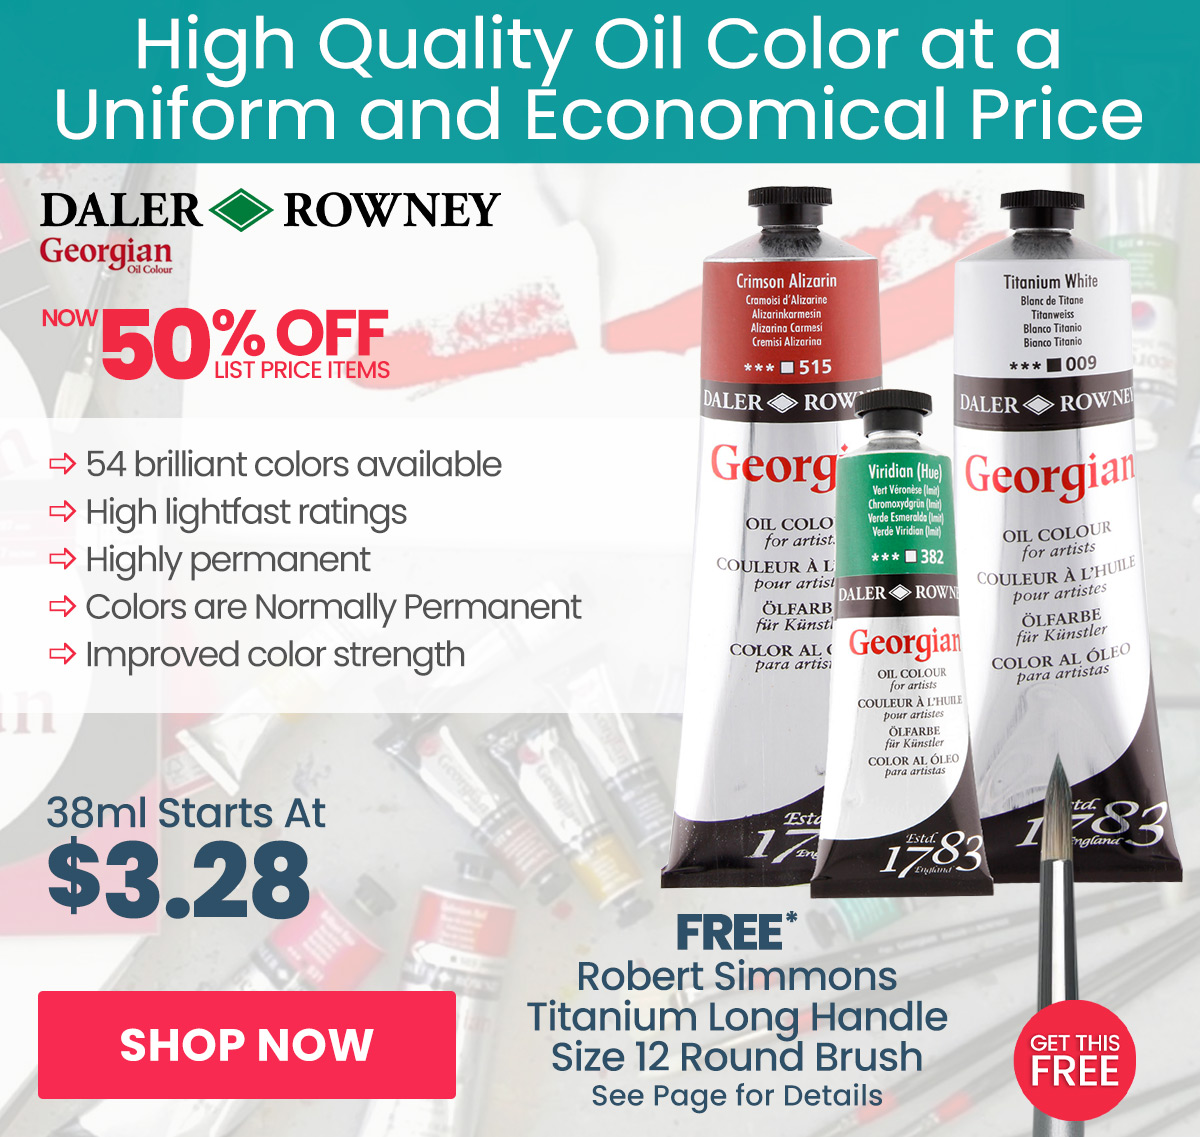 Daler-Rowney Georgian Oil Colors - Free Size 12 Round Brush